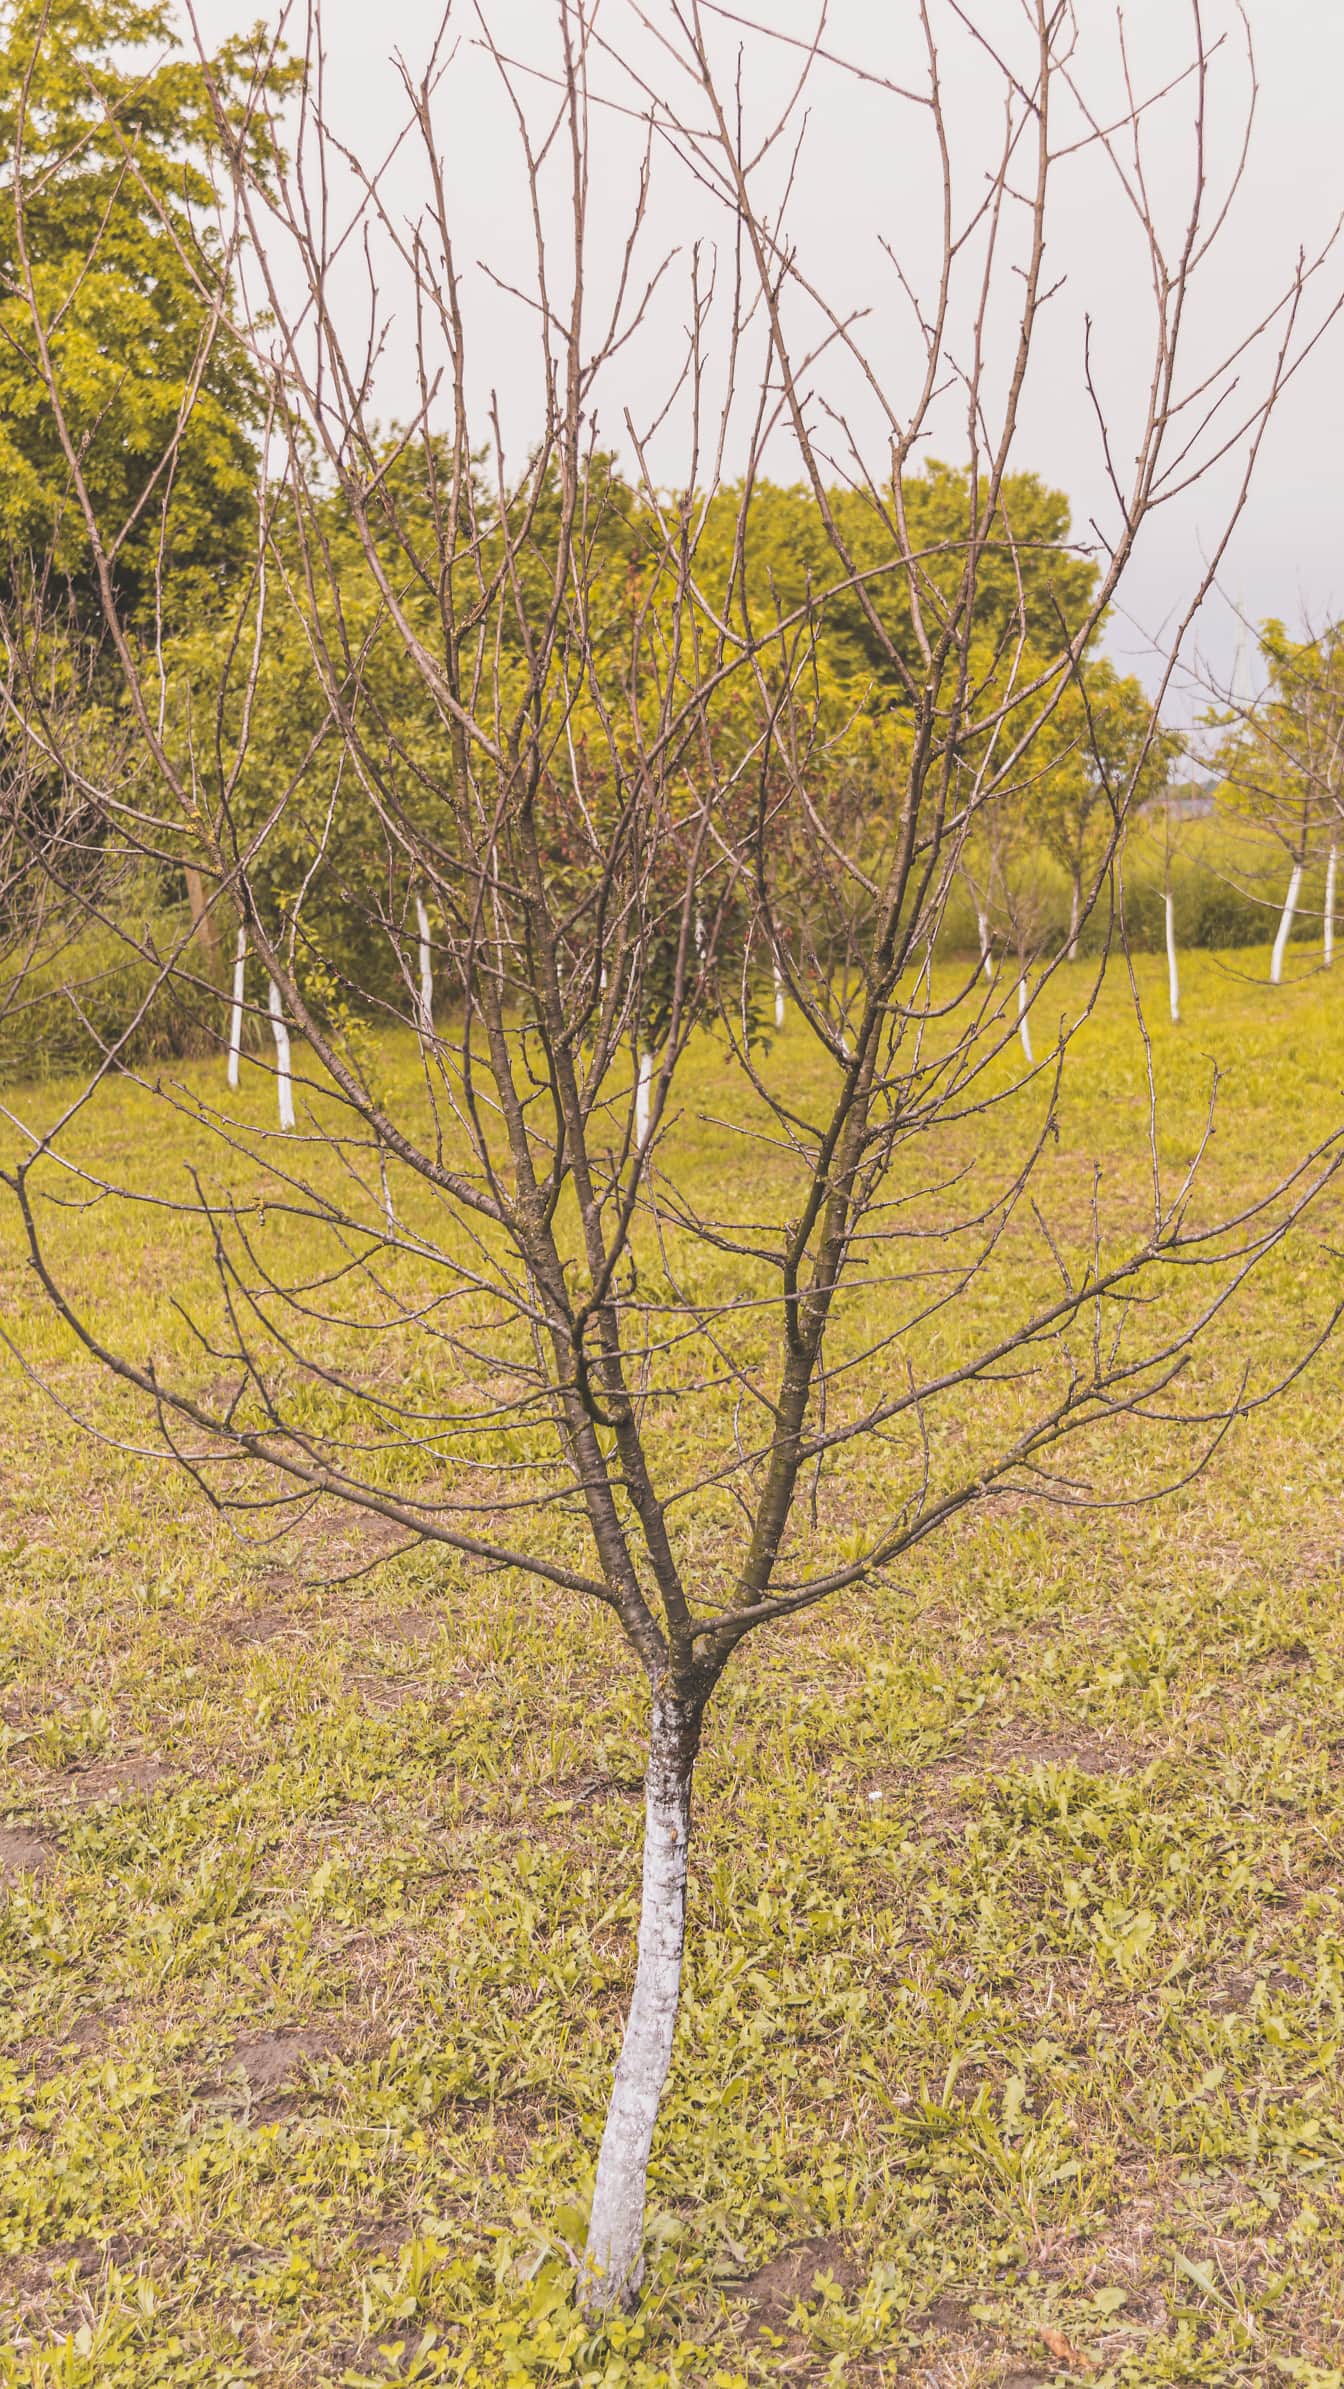 Suchý ovocný strom v sadu za sucha v období sucha